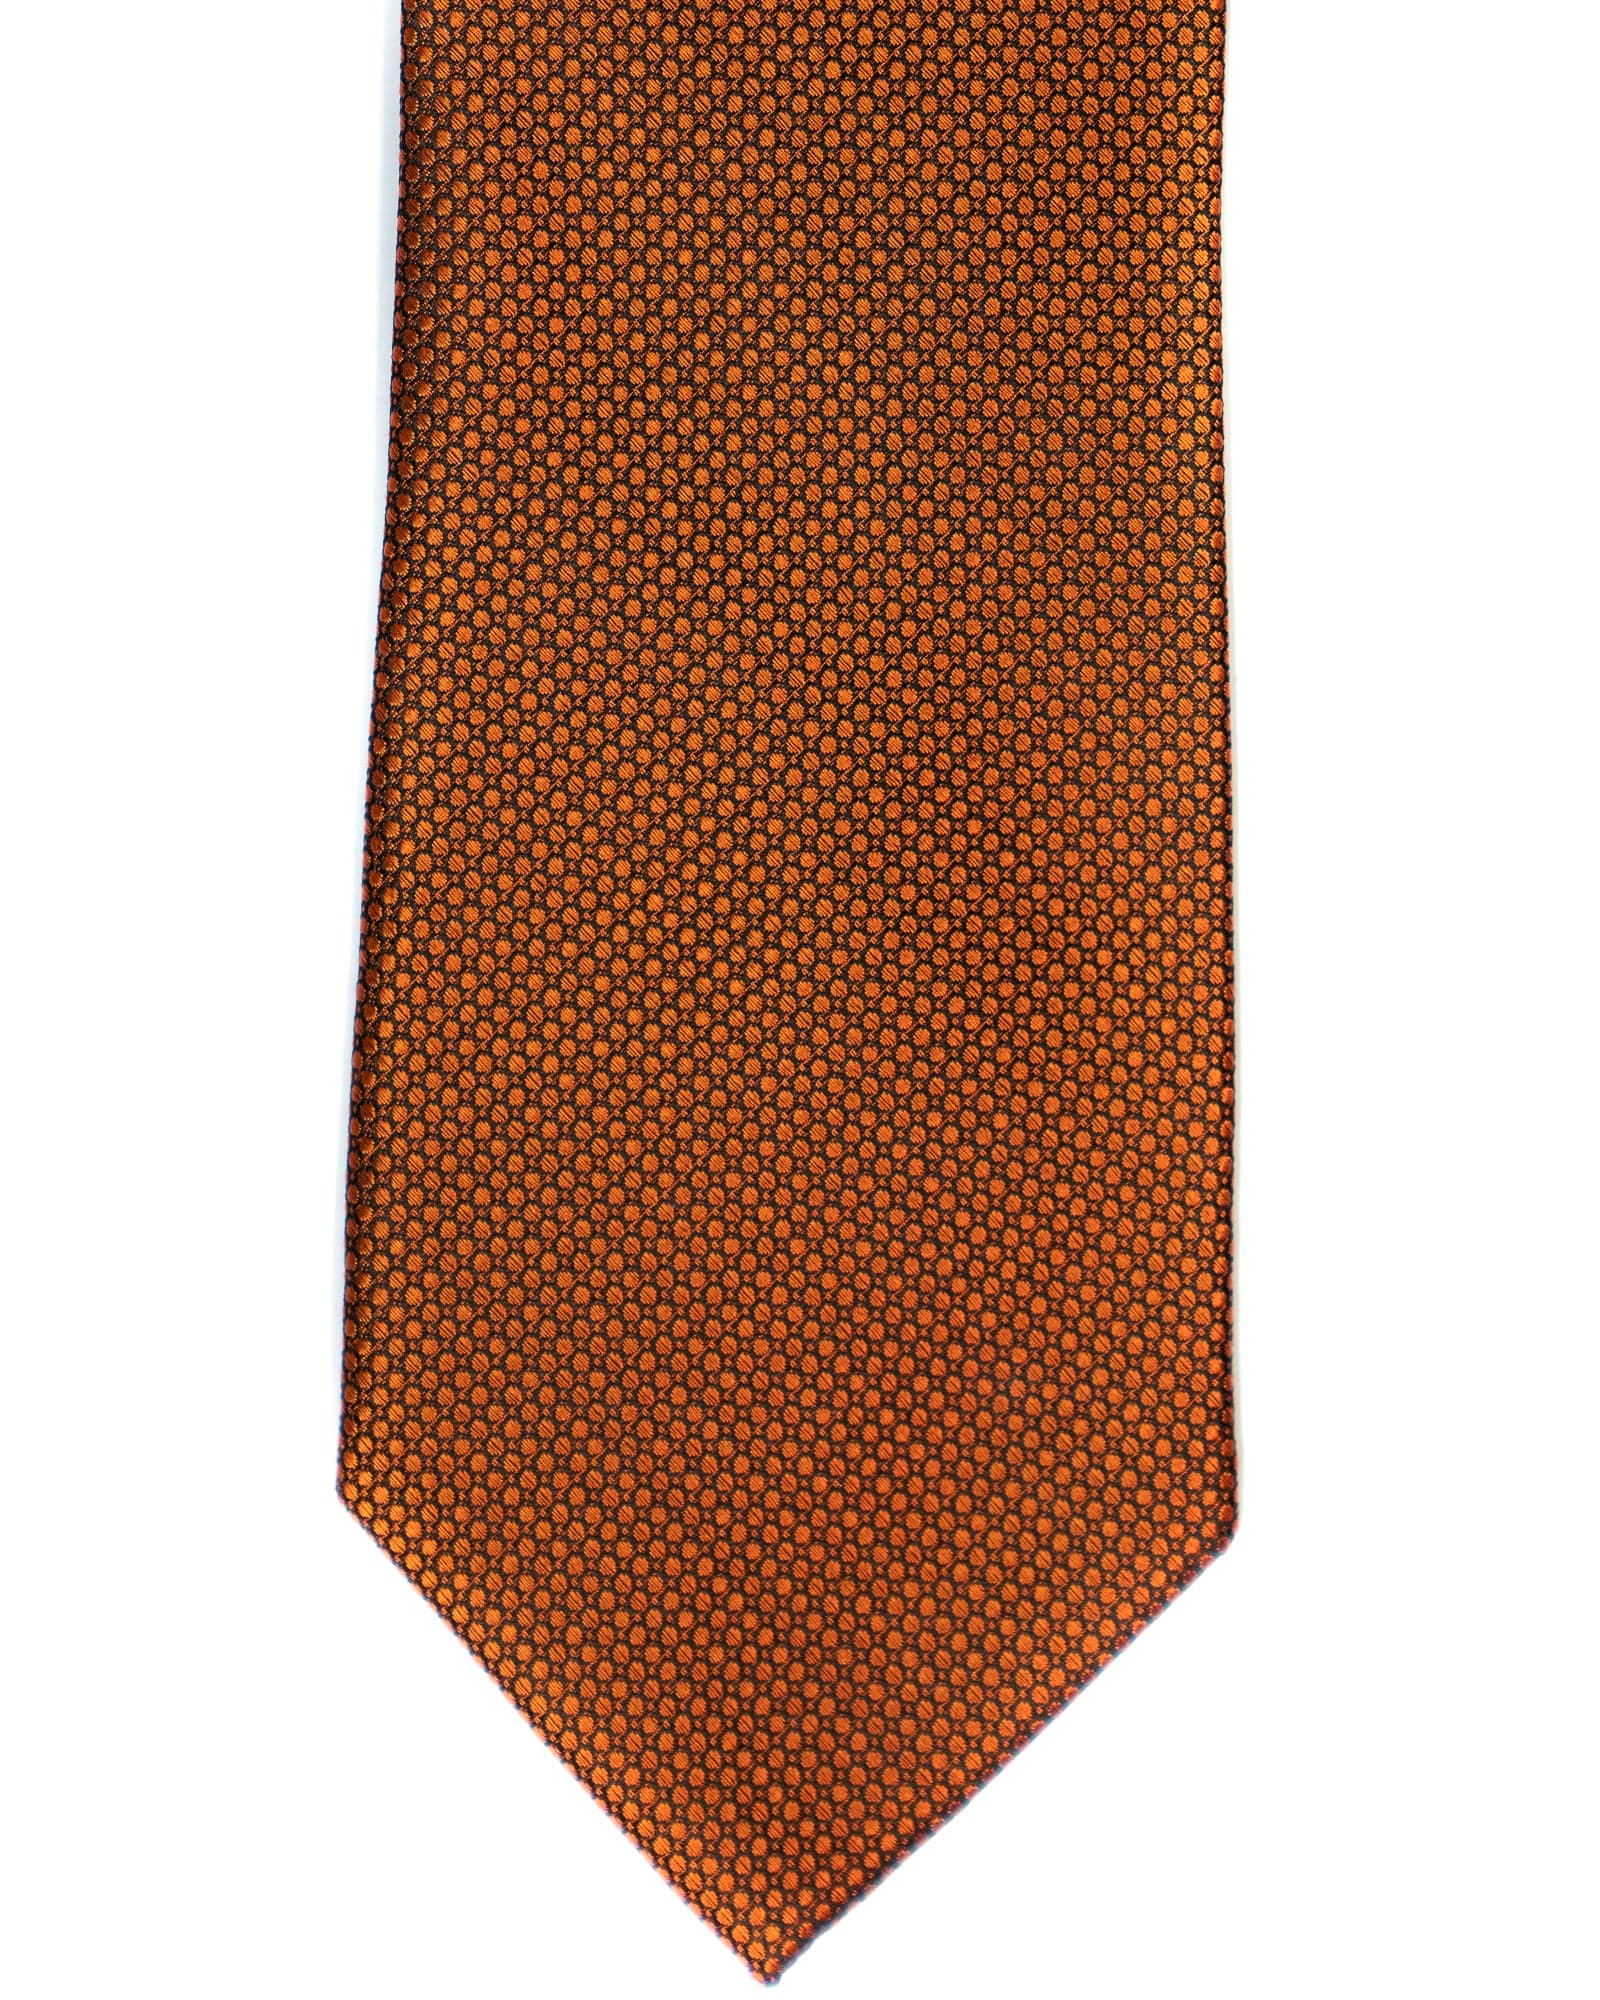 Silk Tie In Orange Solid Honeycomb Weave - Rainwater's Men's Clothing and Tuxedo Rental